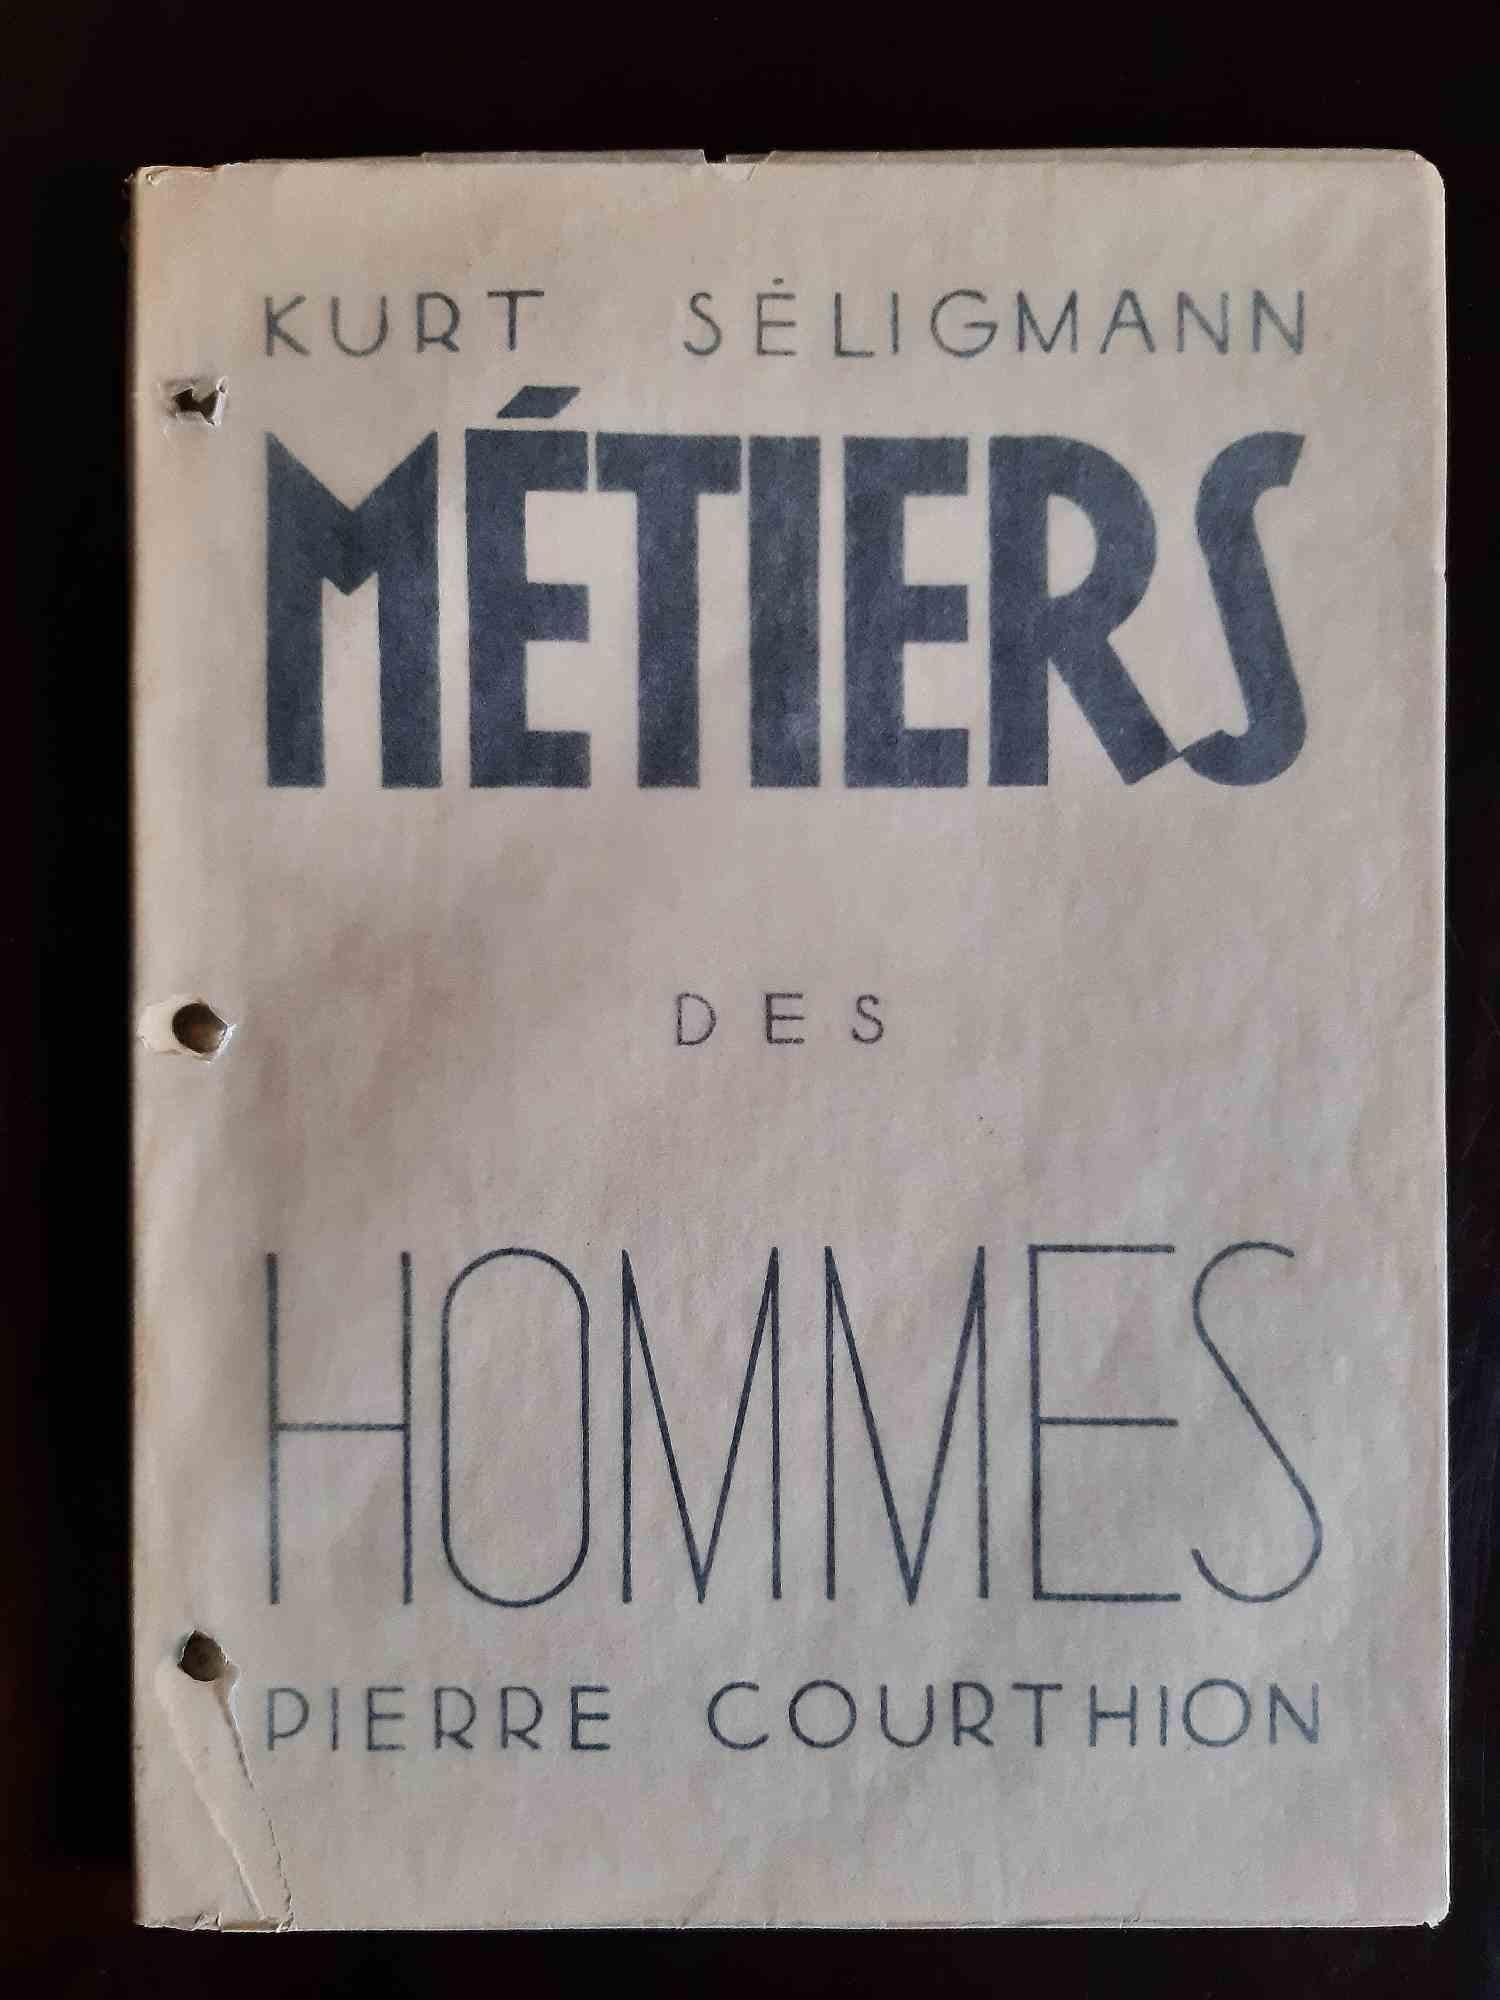 Métiers des Hommes - Rare Book Illustrated by Kurt Seligmann - 1936 For Sale 1